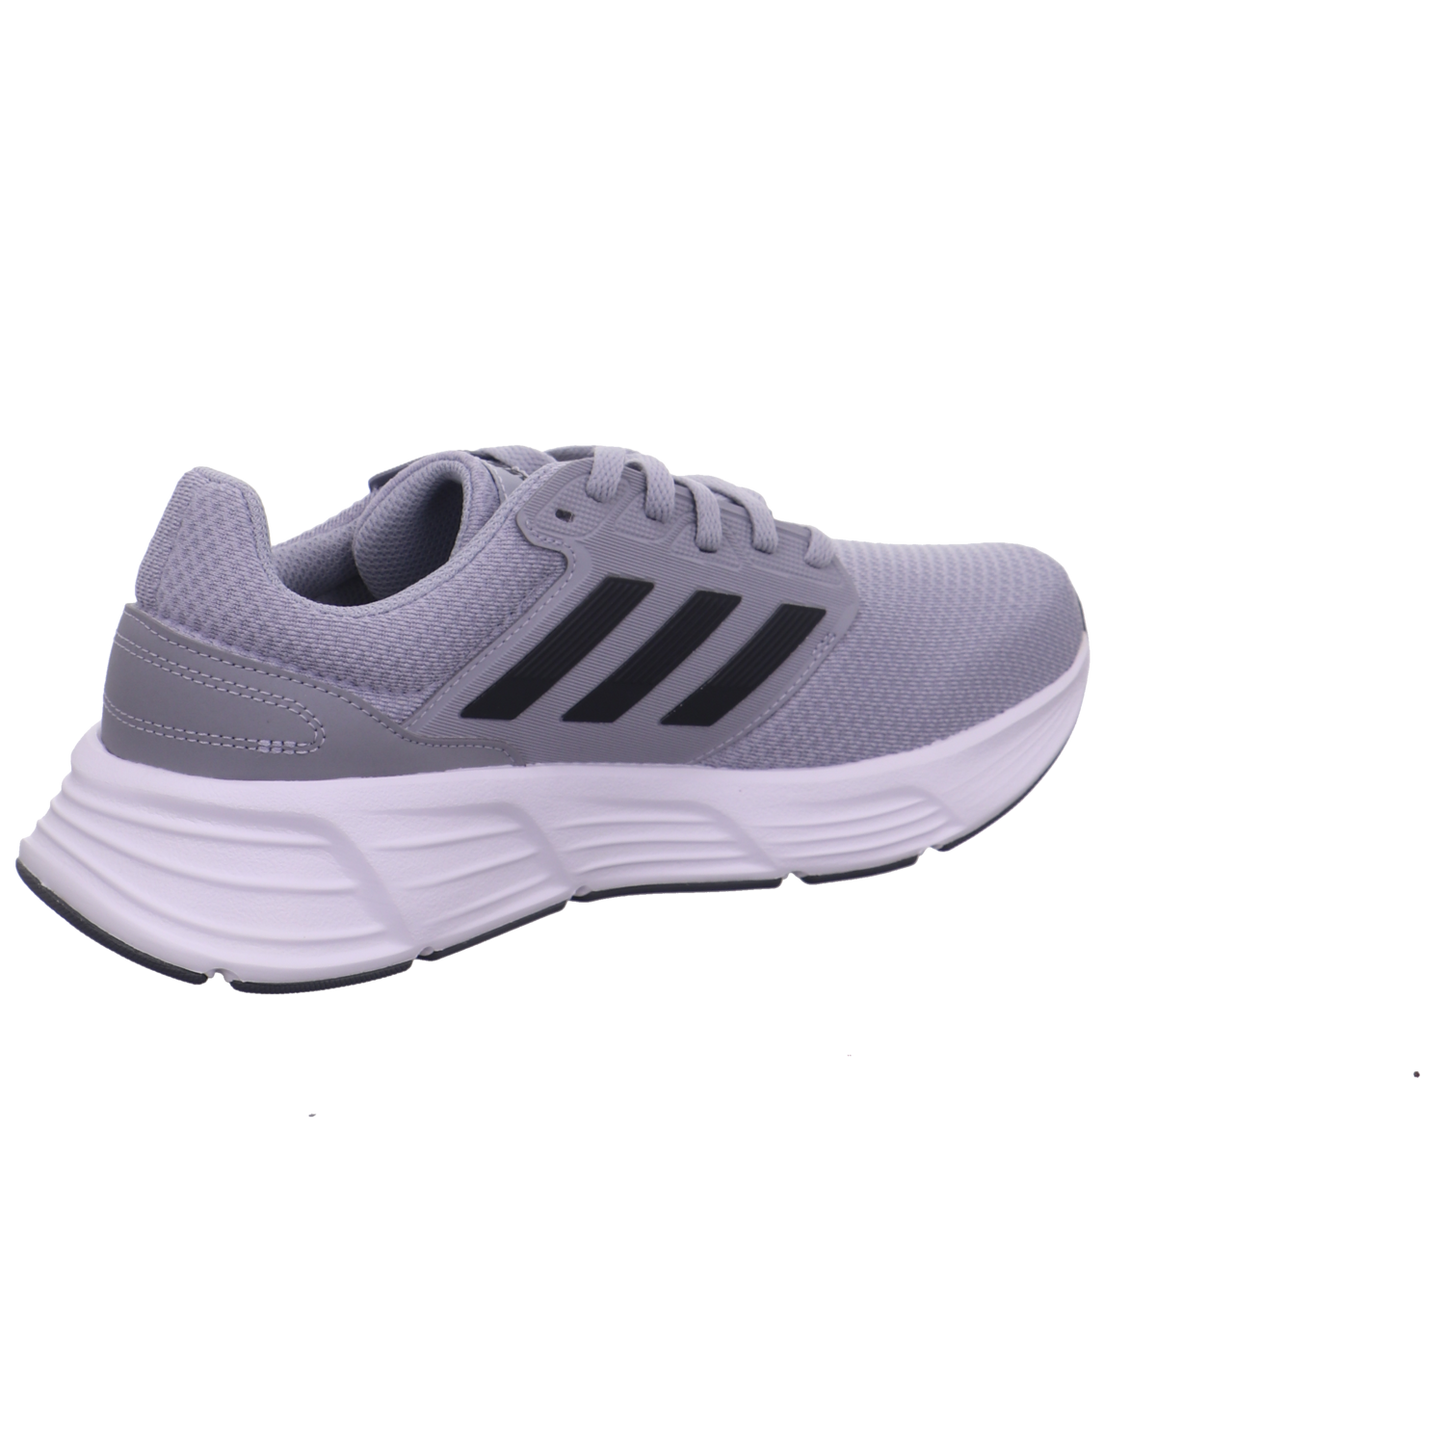 Adidas Sneaker grau kombi Bild5